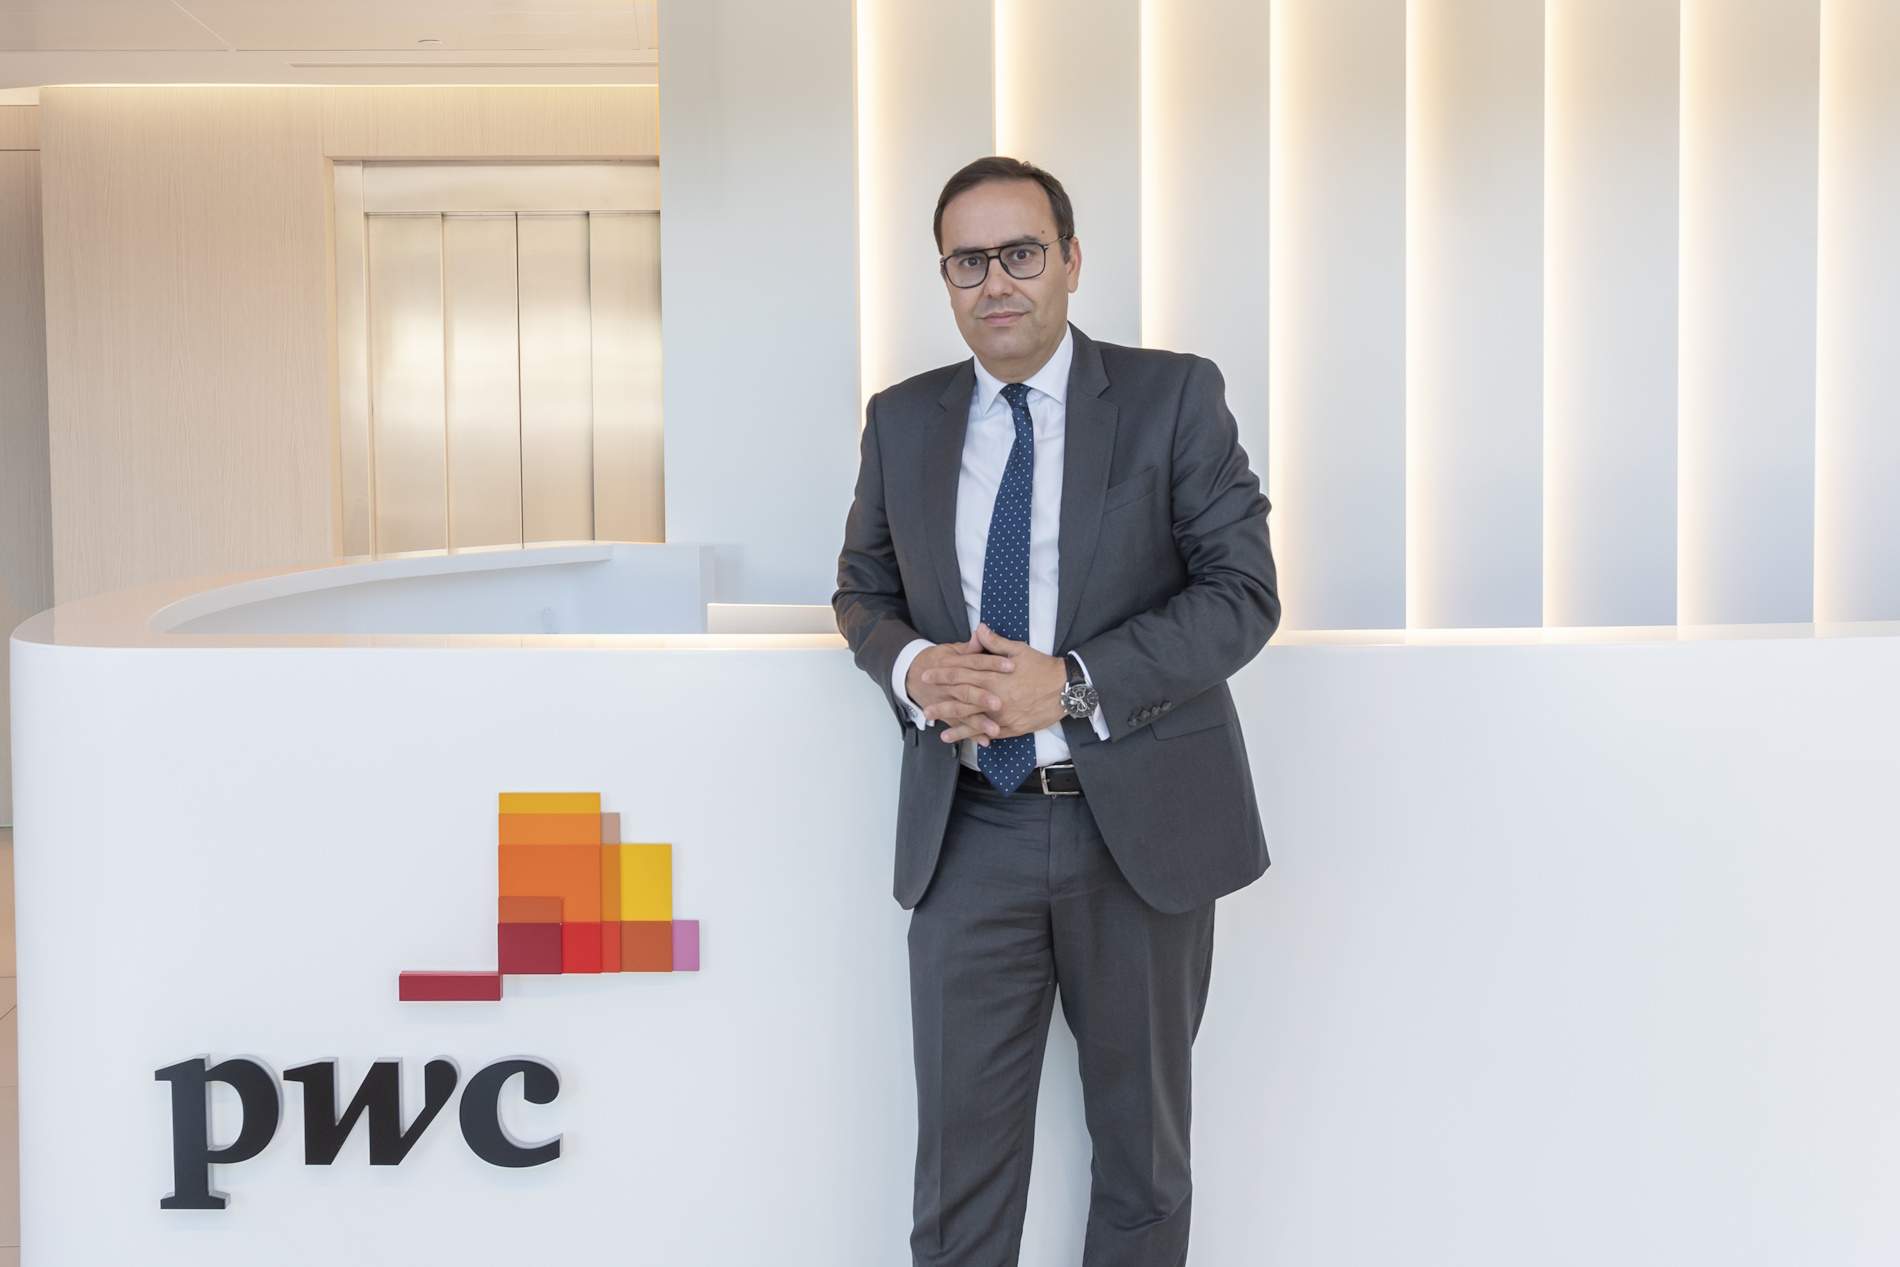 Oscar Terral, nou soci responsable d'Energia a PwC Espanya